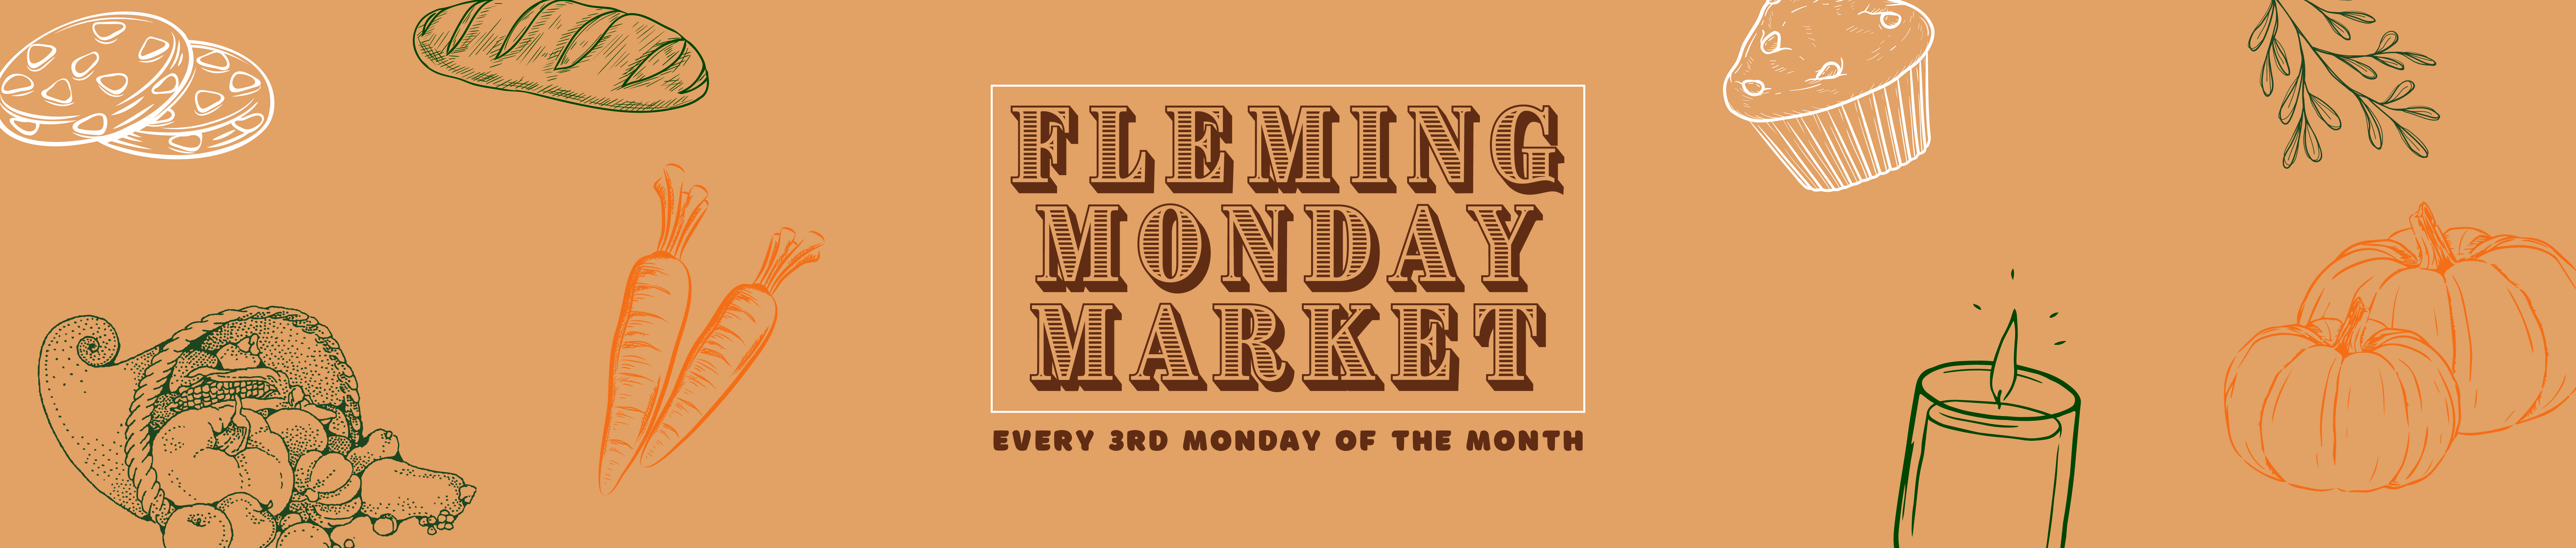 Fleming Colorado Monday Market